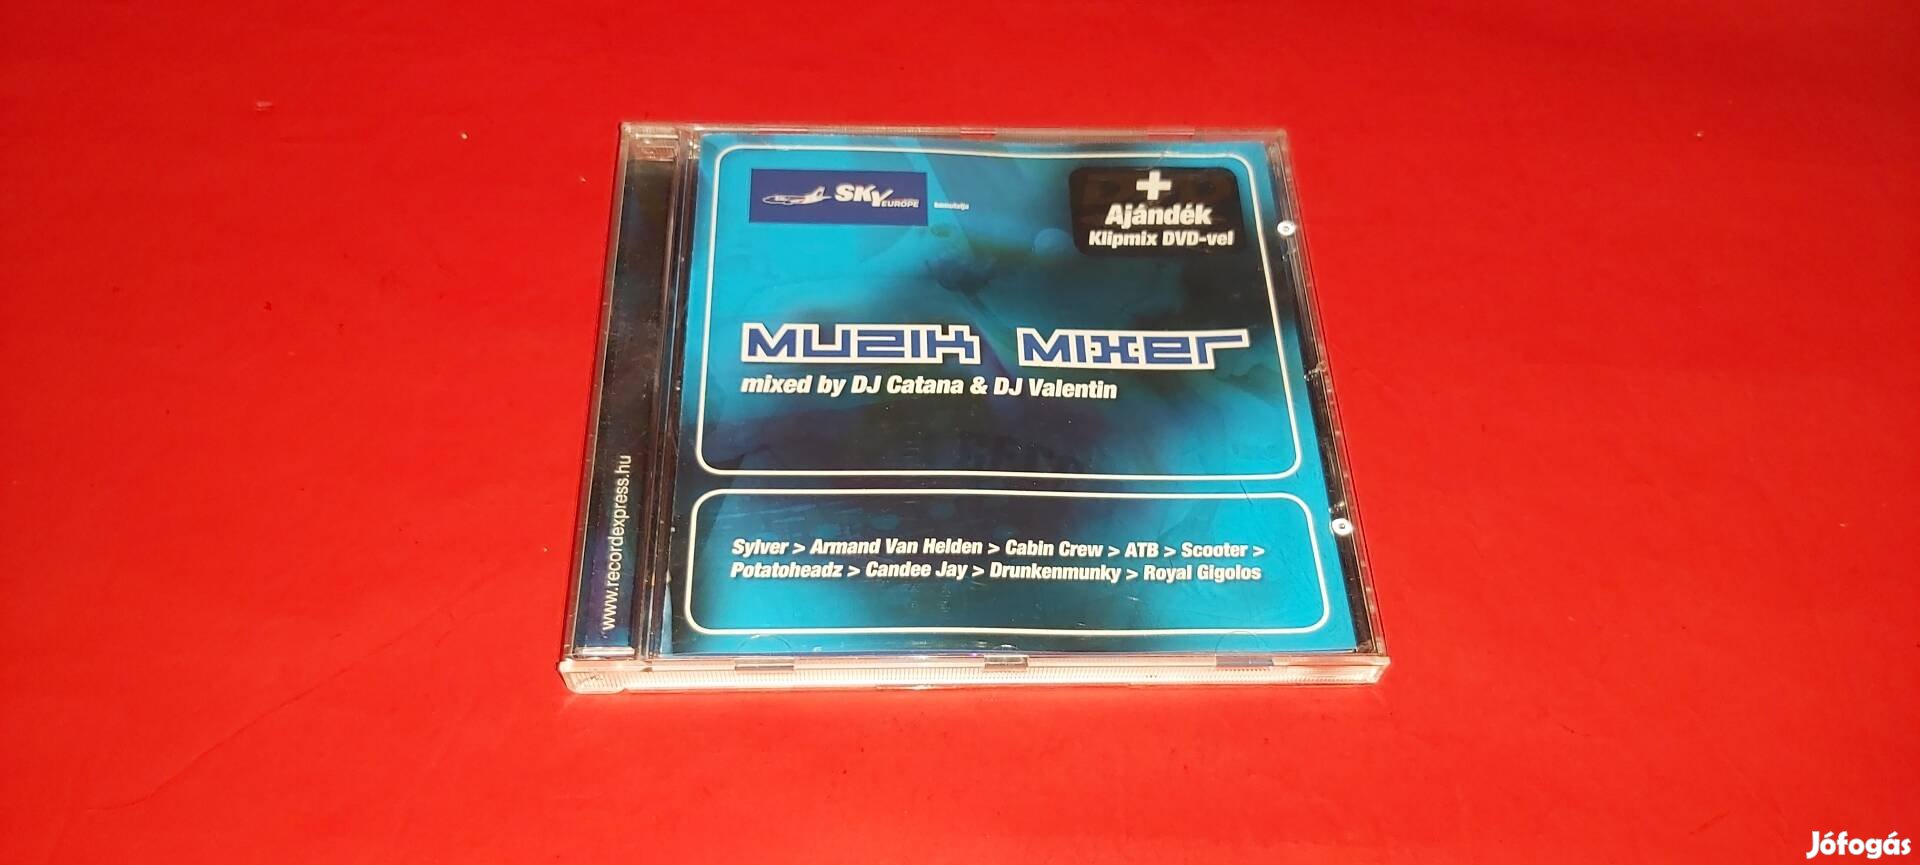 Dj Catana Dj Valentin Muzik Mixer Hybrid Cd/Dvd 2005